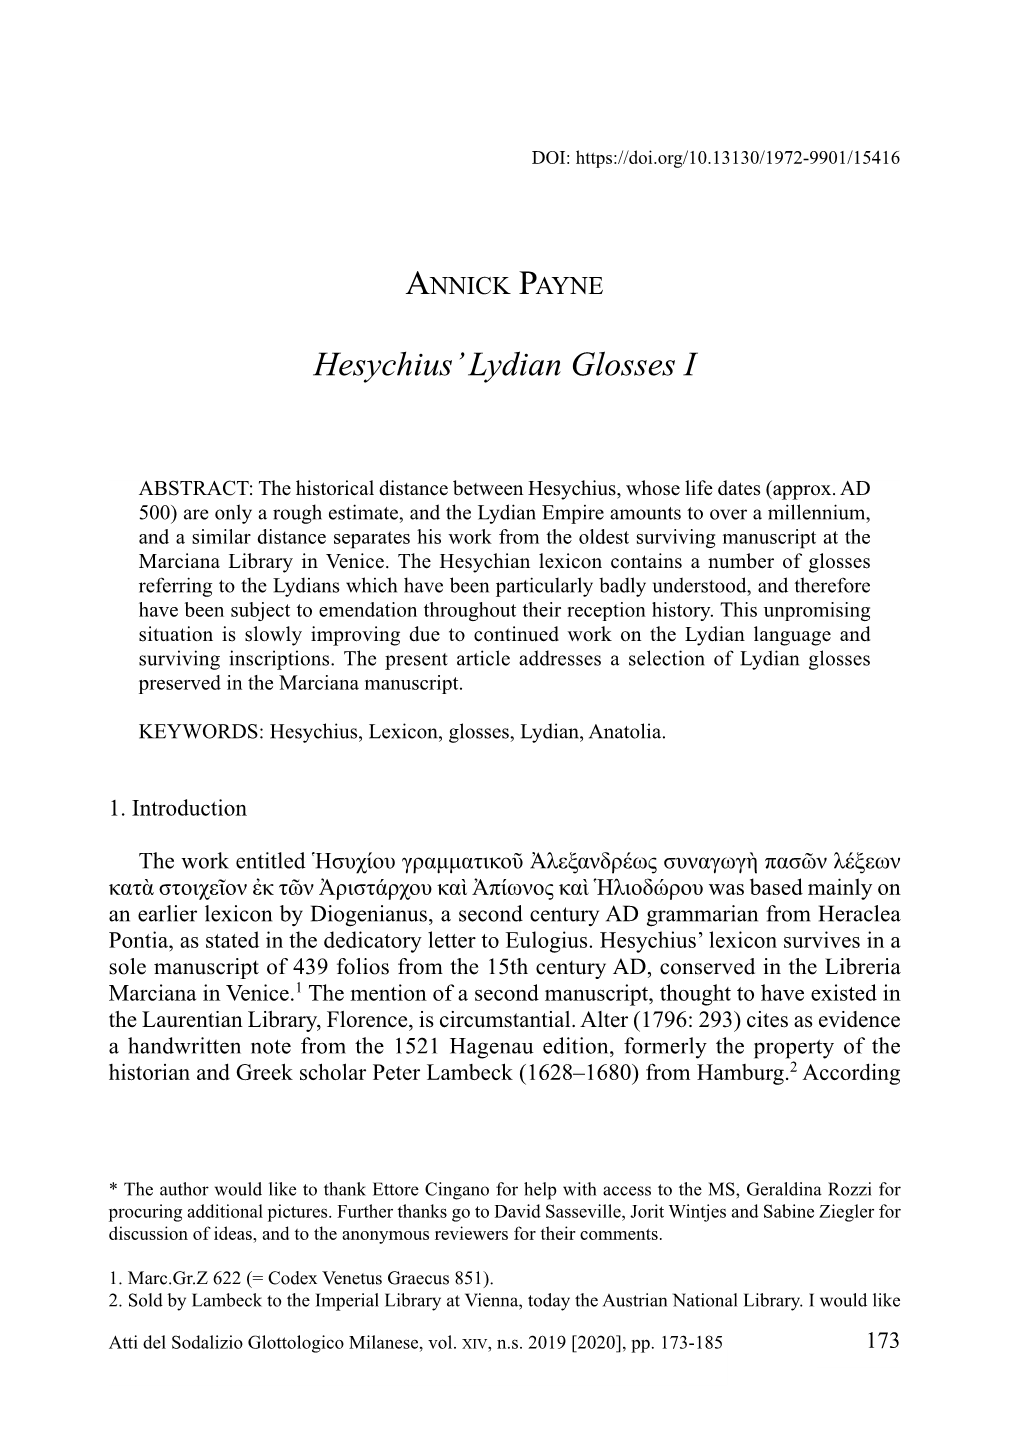 ANNICK PAYNE Hesychius' Lydian Glosses I